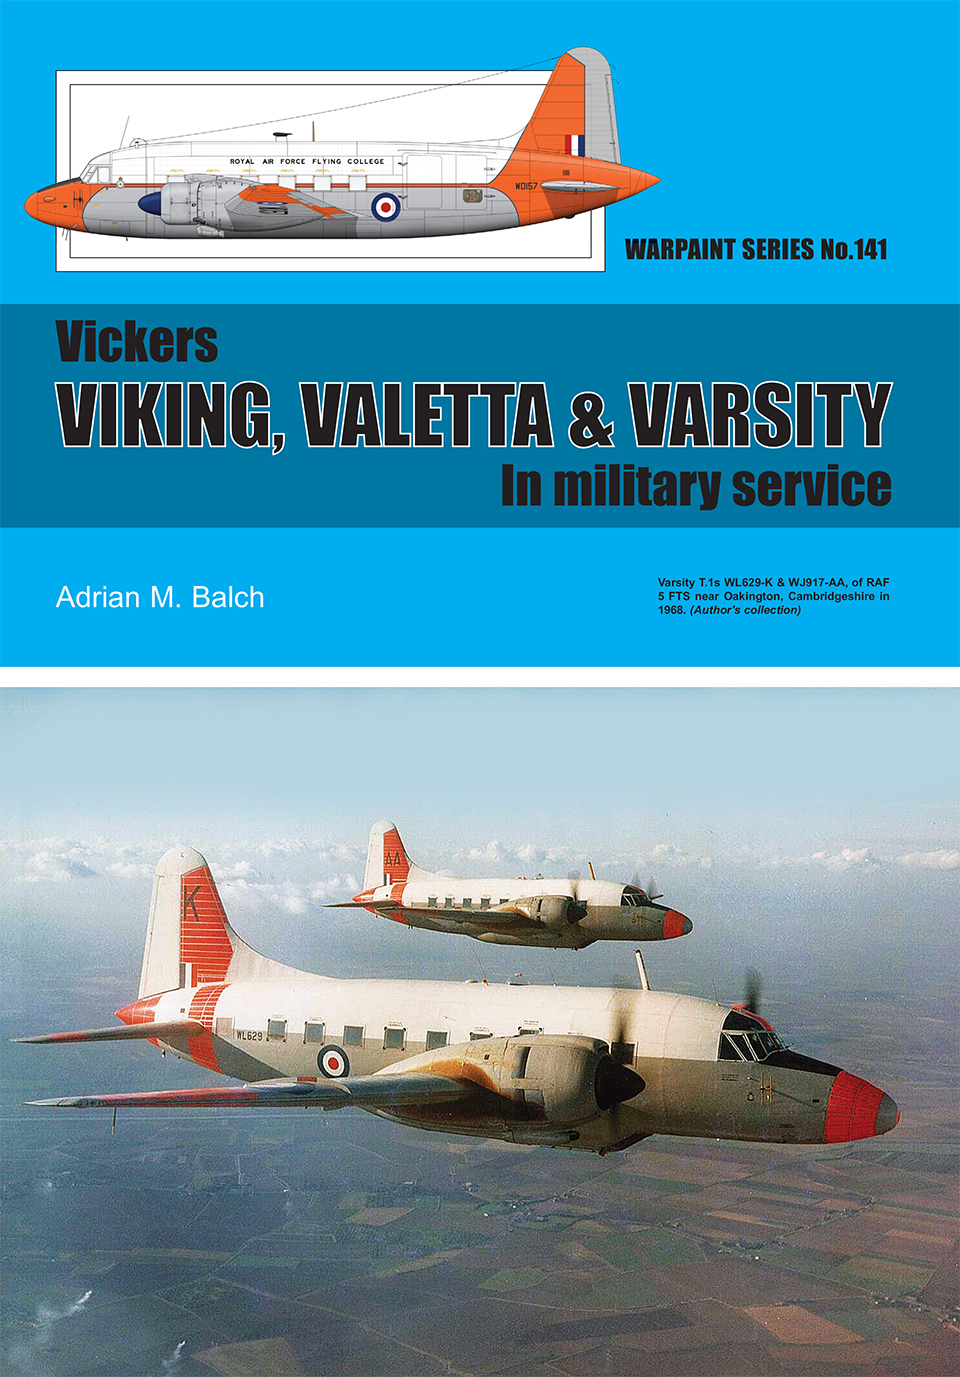 Guideline Publications Ltd Warpaint141 Vickers Viking- Valetta & Varsity 